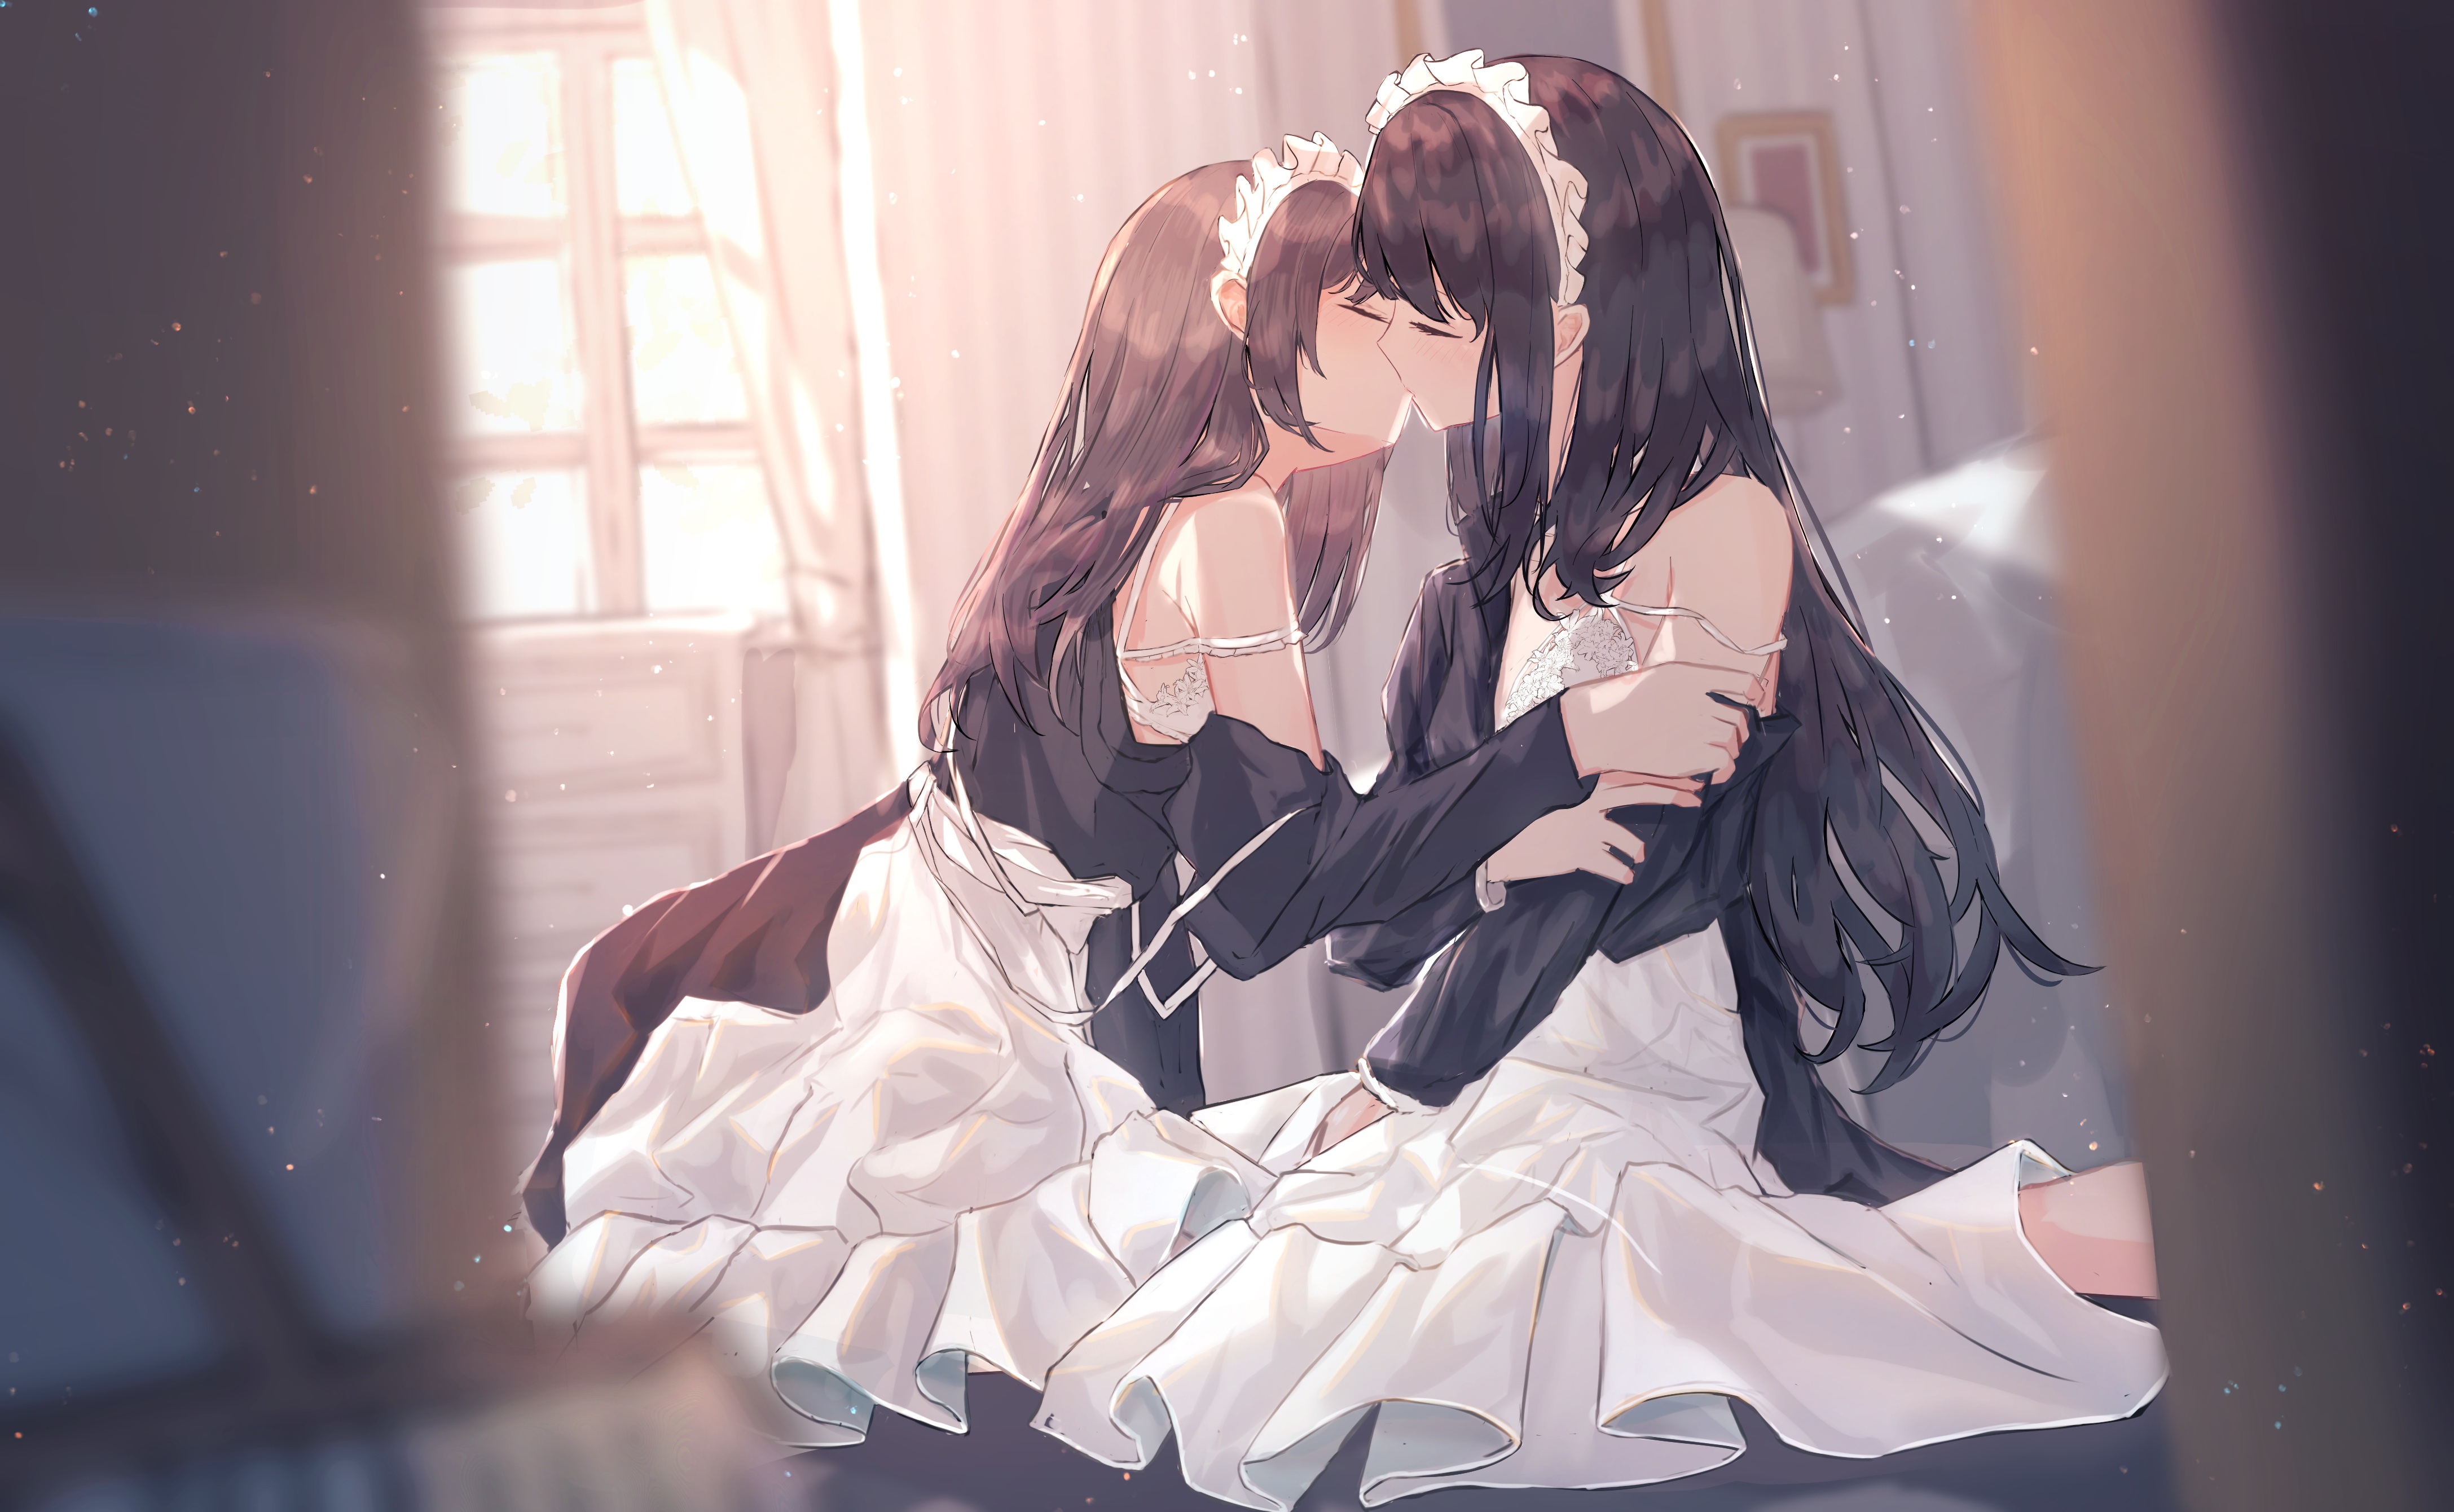 Lesbians Closed Eyes Two Women Anime Anime Girls Kissing Yuri Maid 4350x2680 Wallpaper